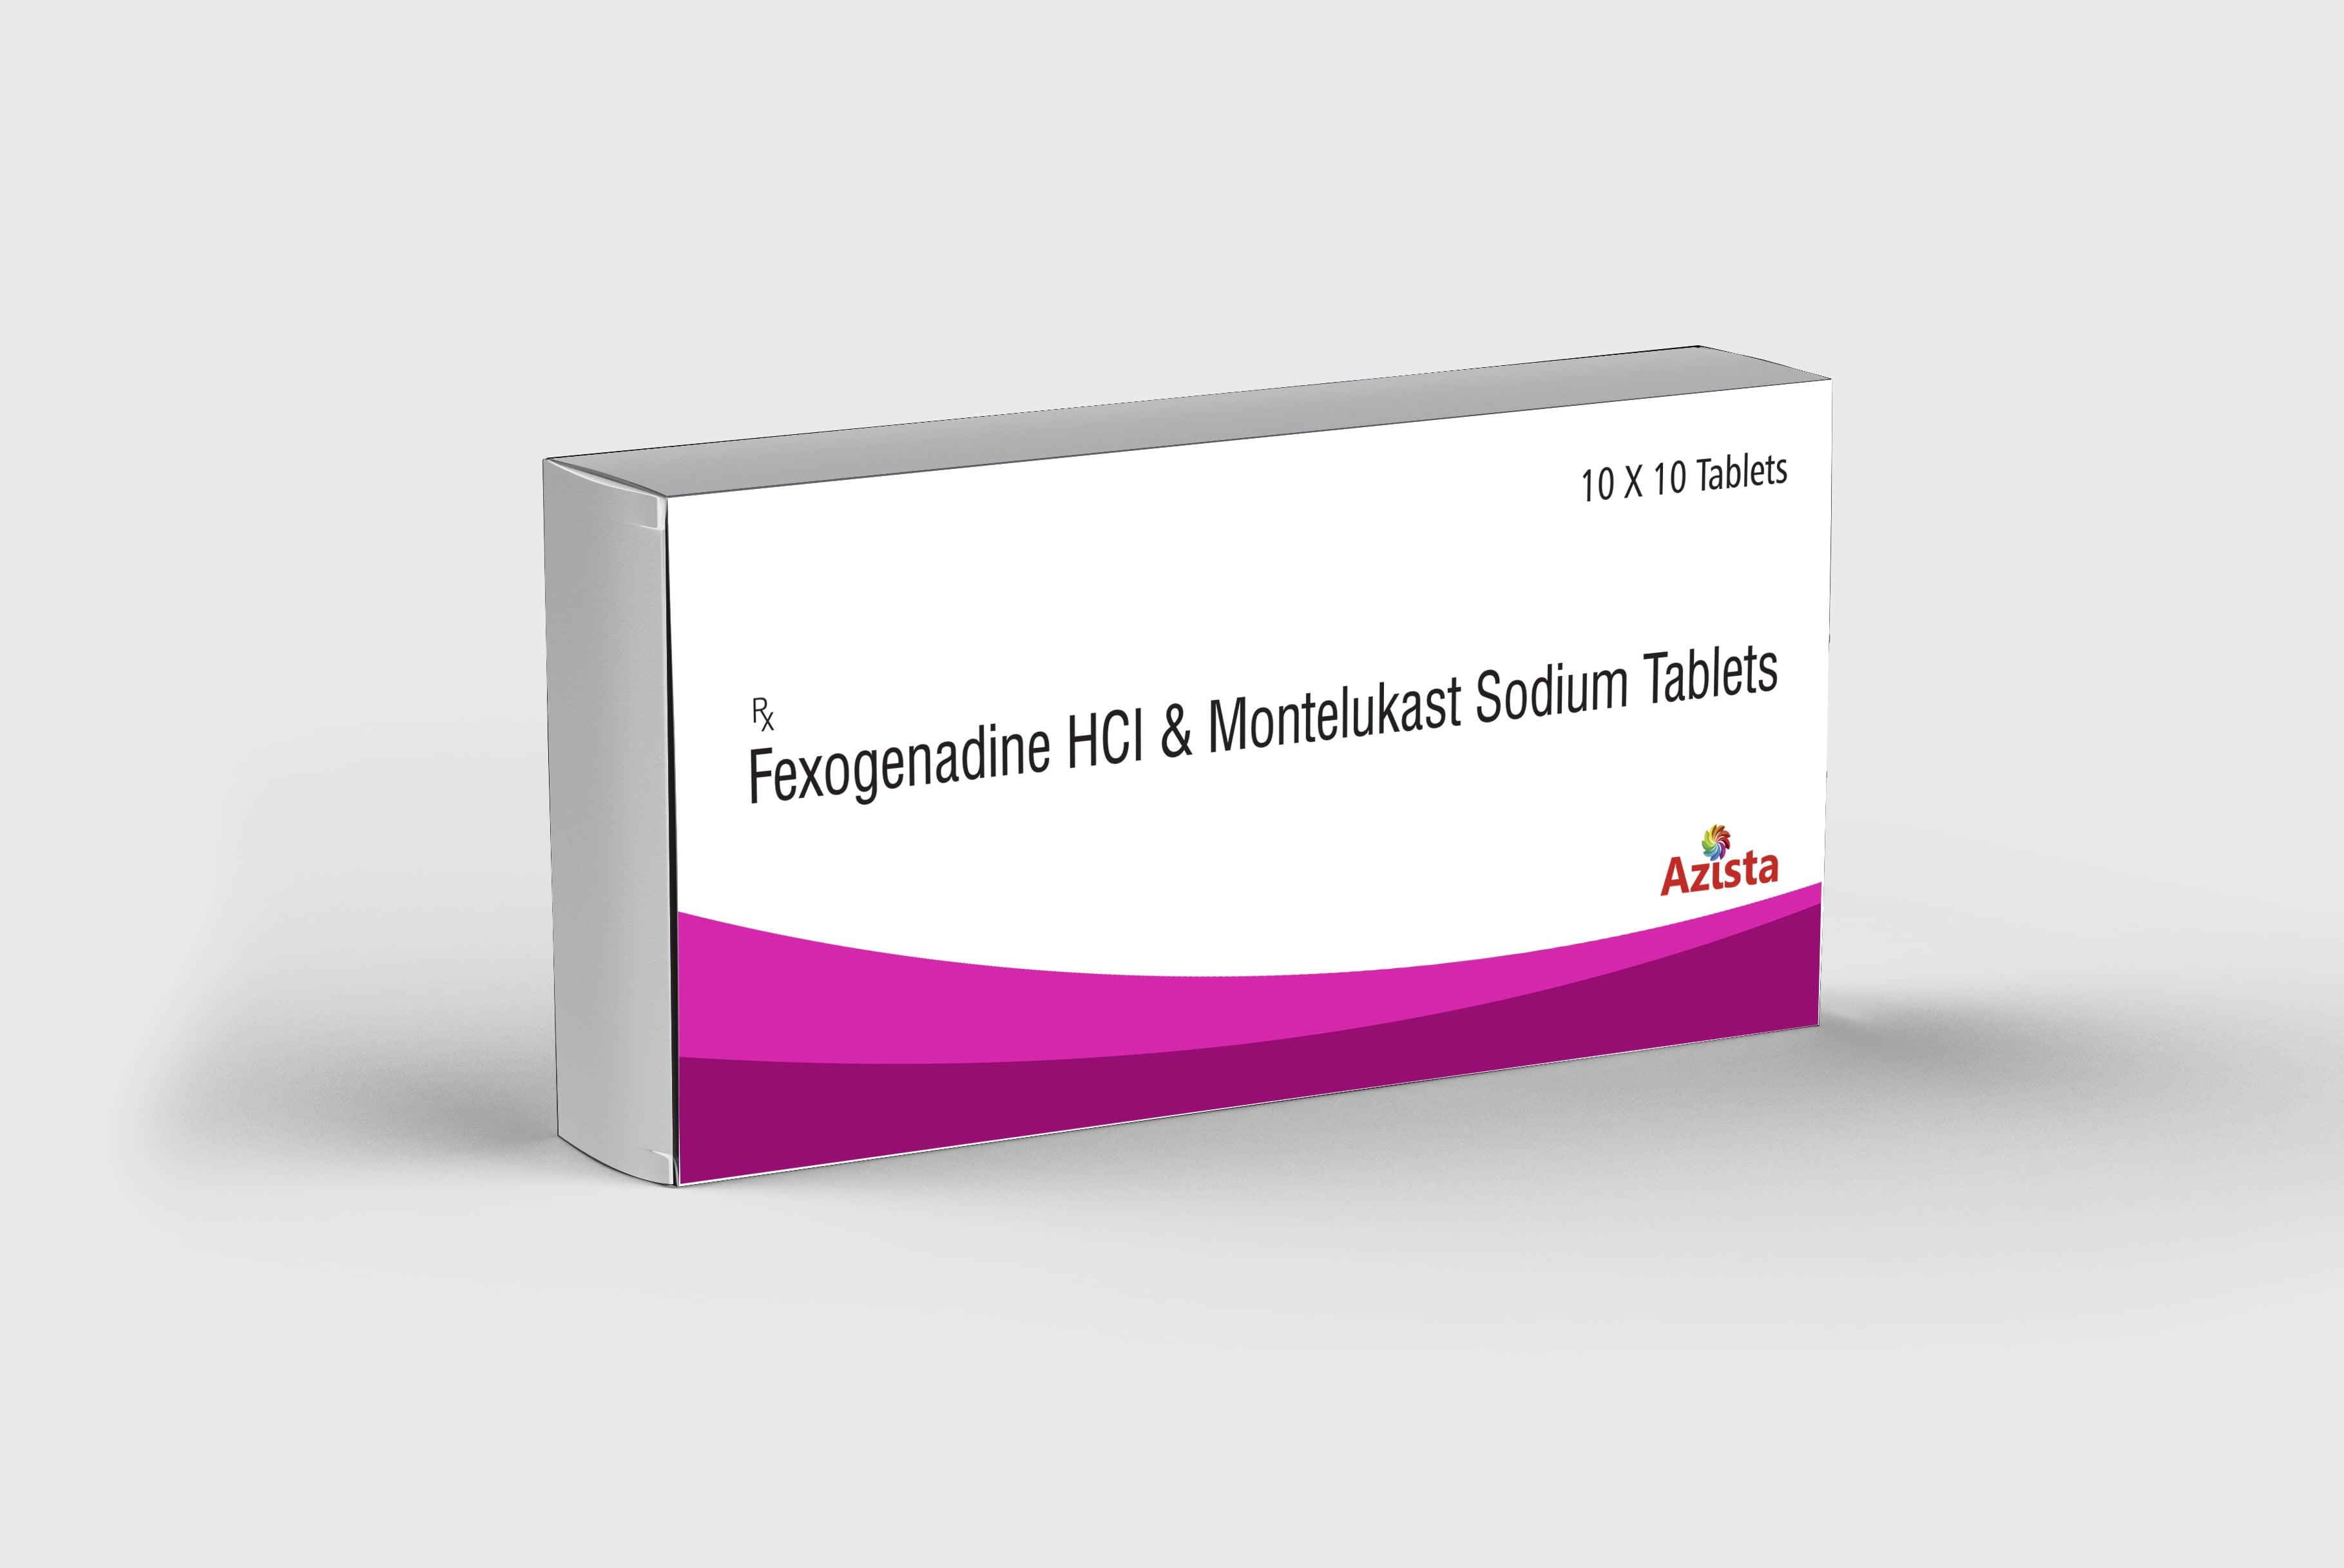 Fexofenadine Hydrochloride 120mg + Montelukast 10mg